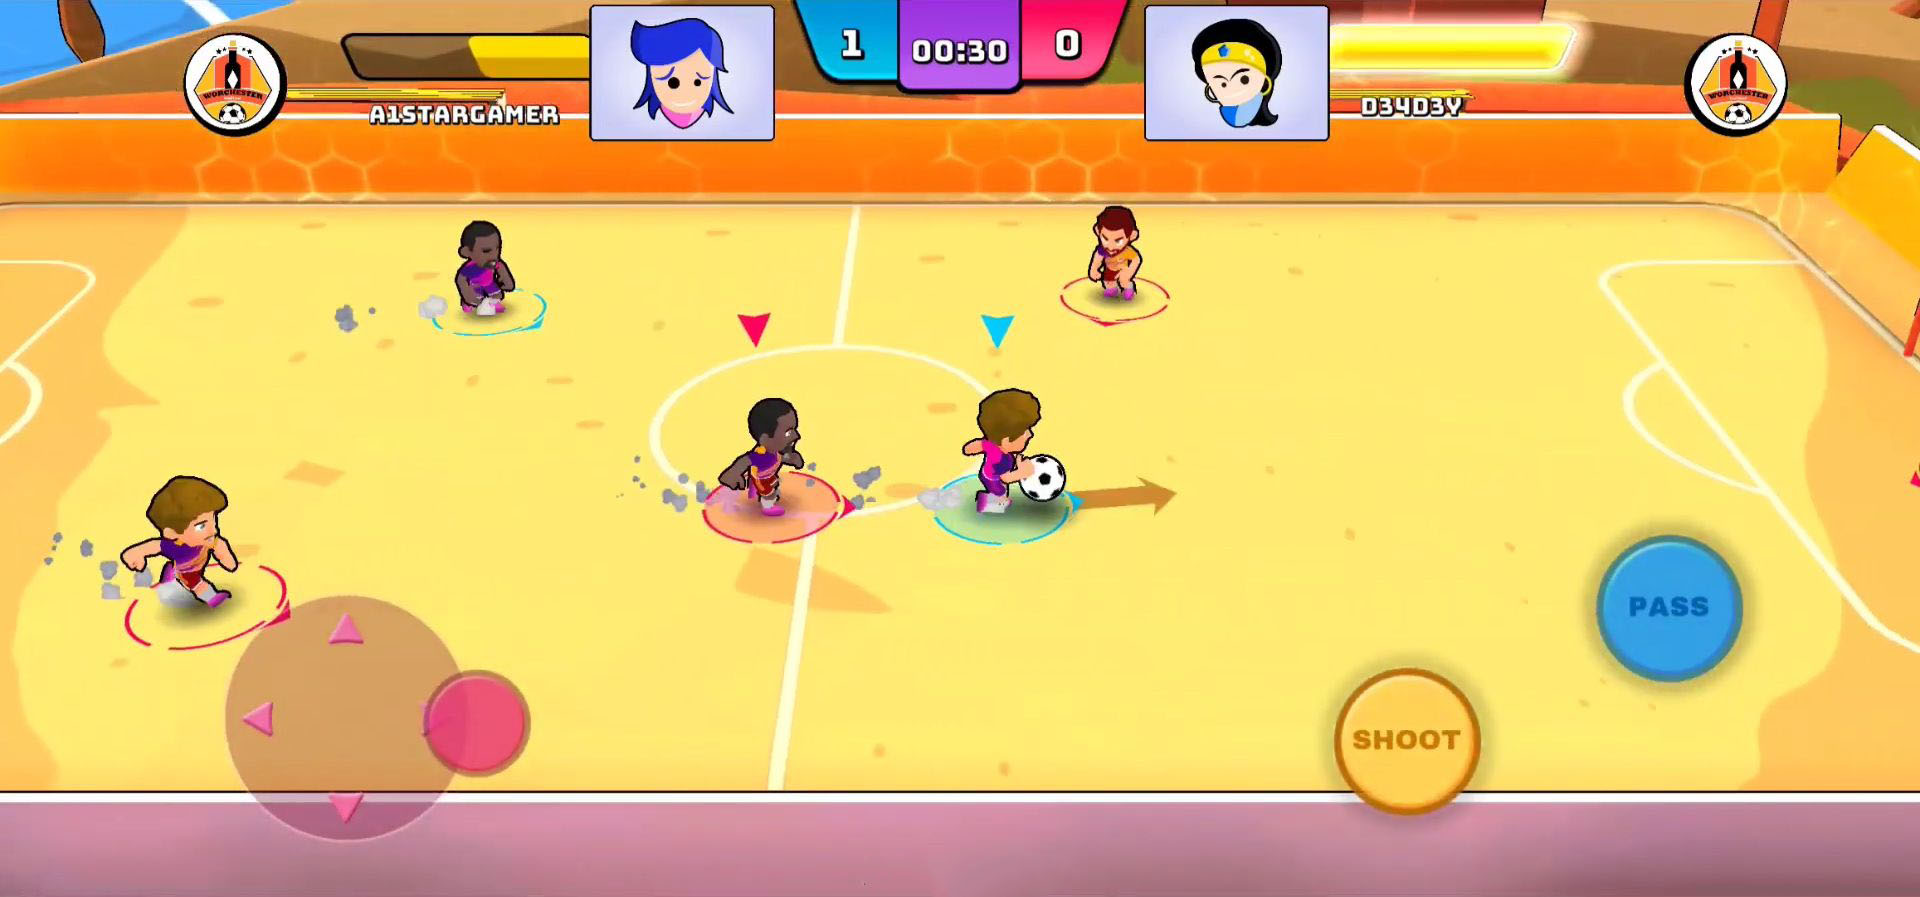 World League Live! Football - Android game screenshots.